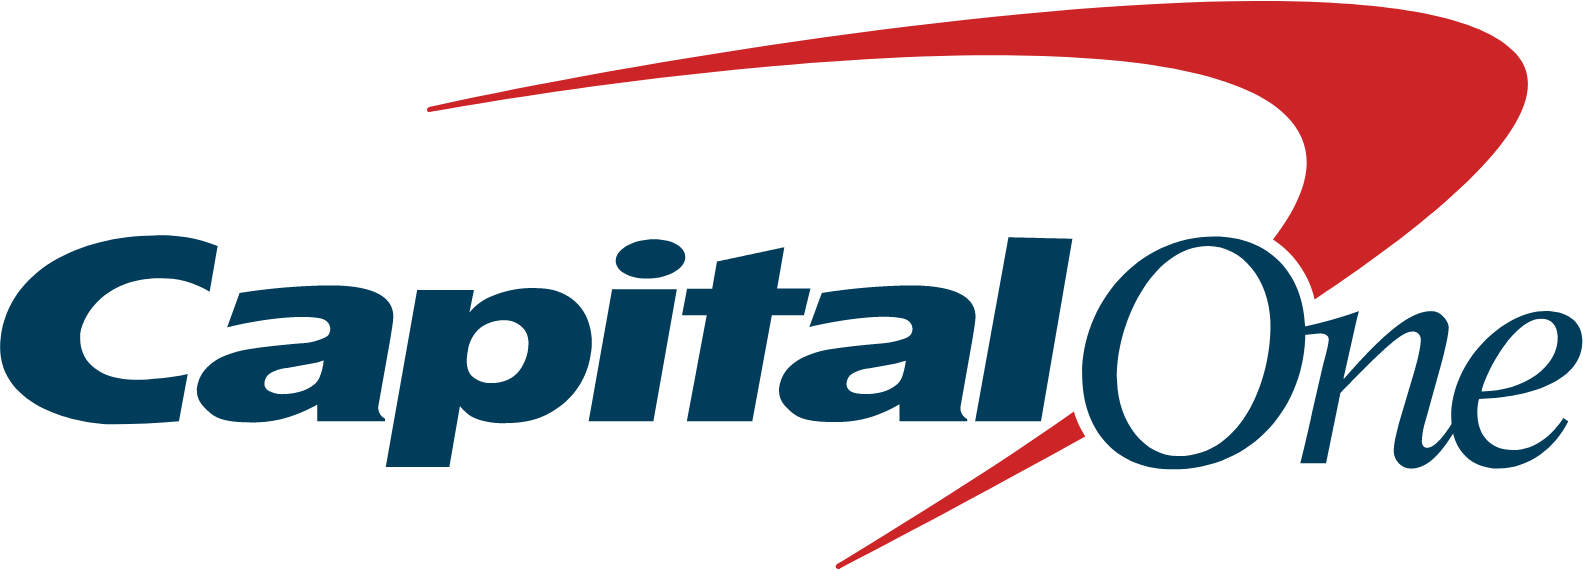 Capital One logo large (transparent PNG)